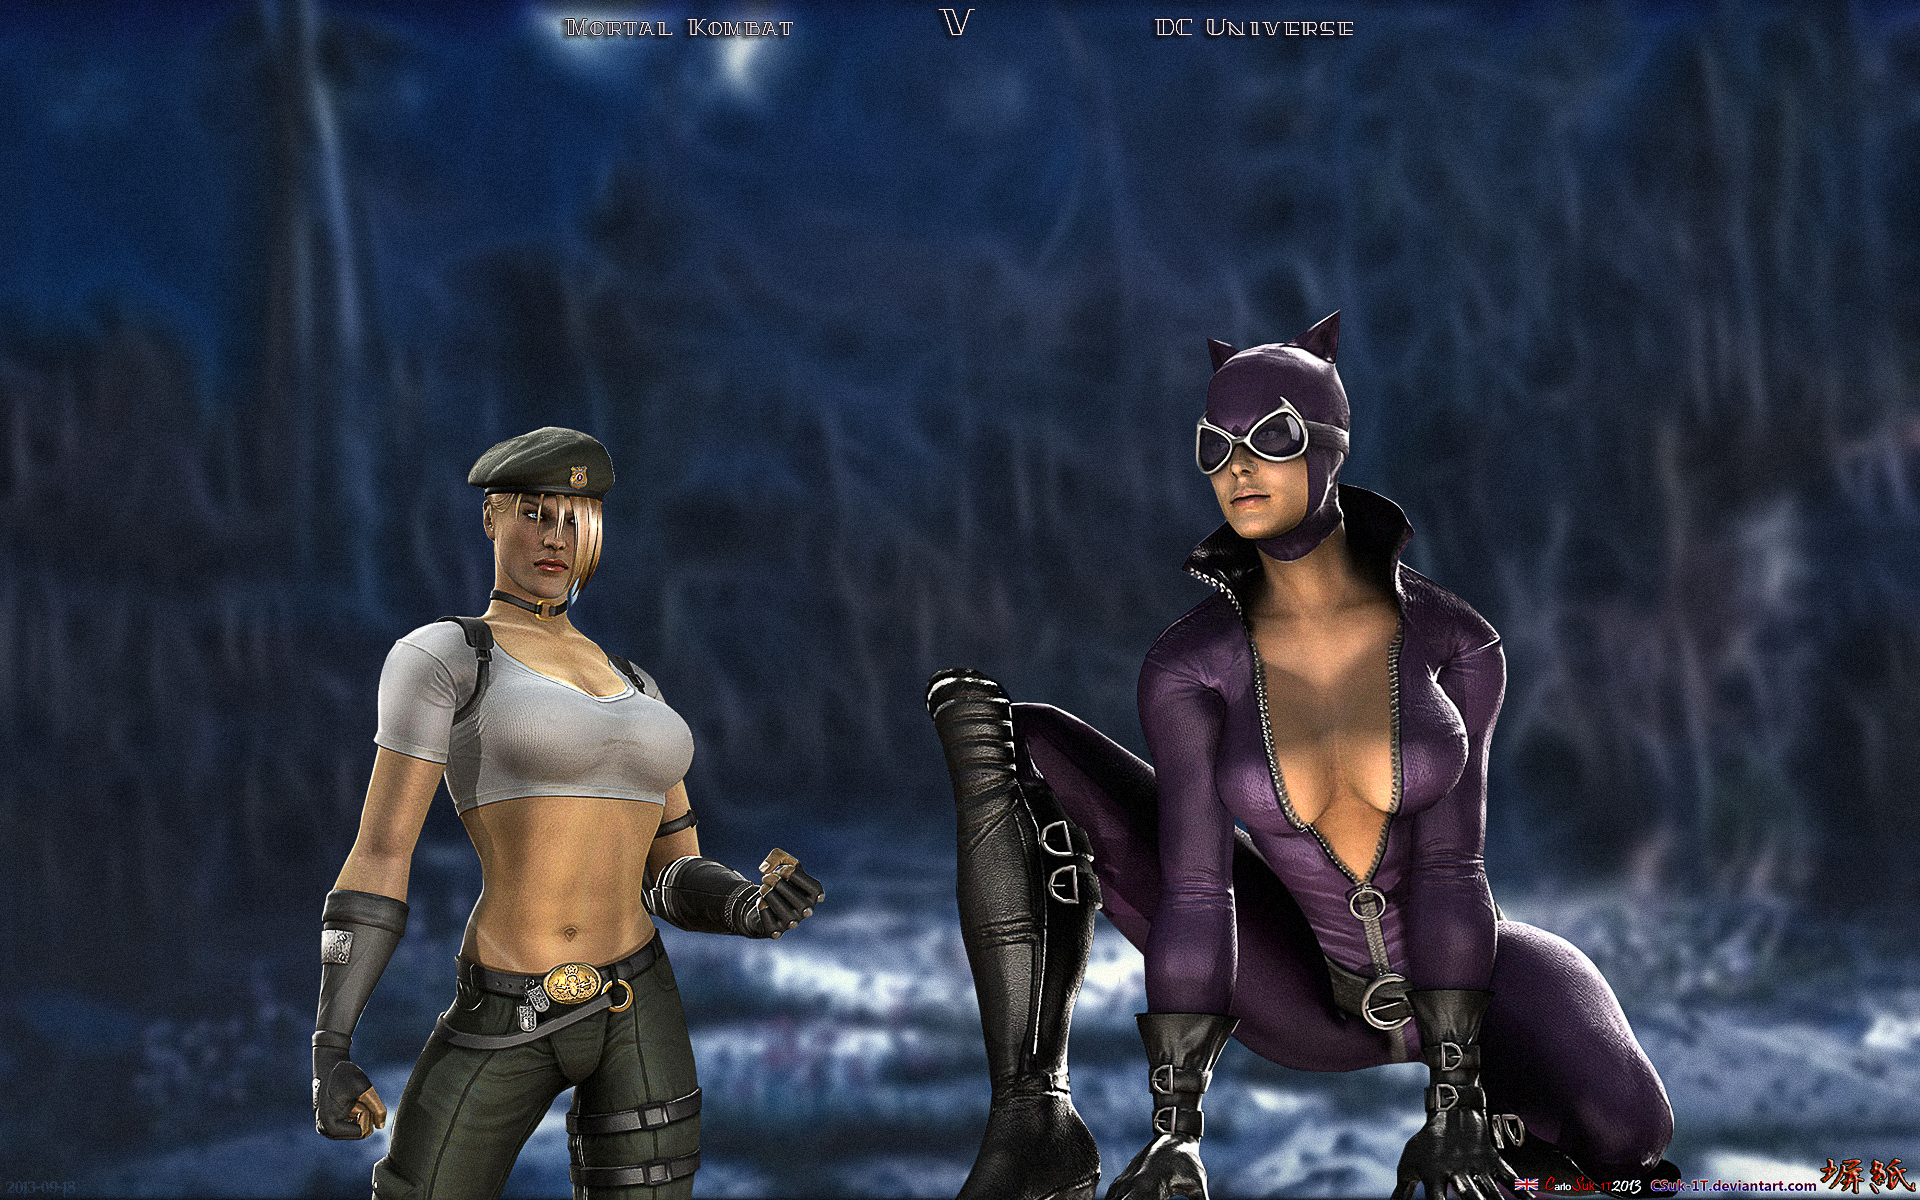 Mortal Kombat v DCUniverse Sonya Blade v Catwoman by CSuk 1T on